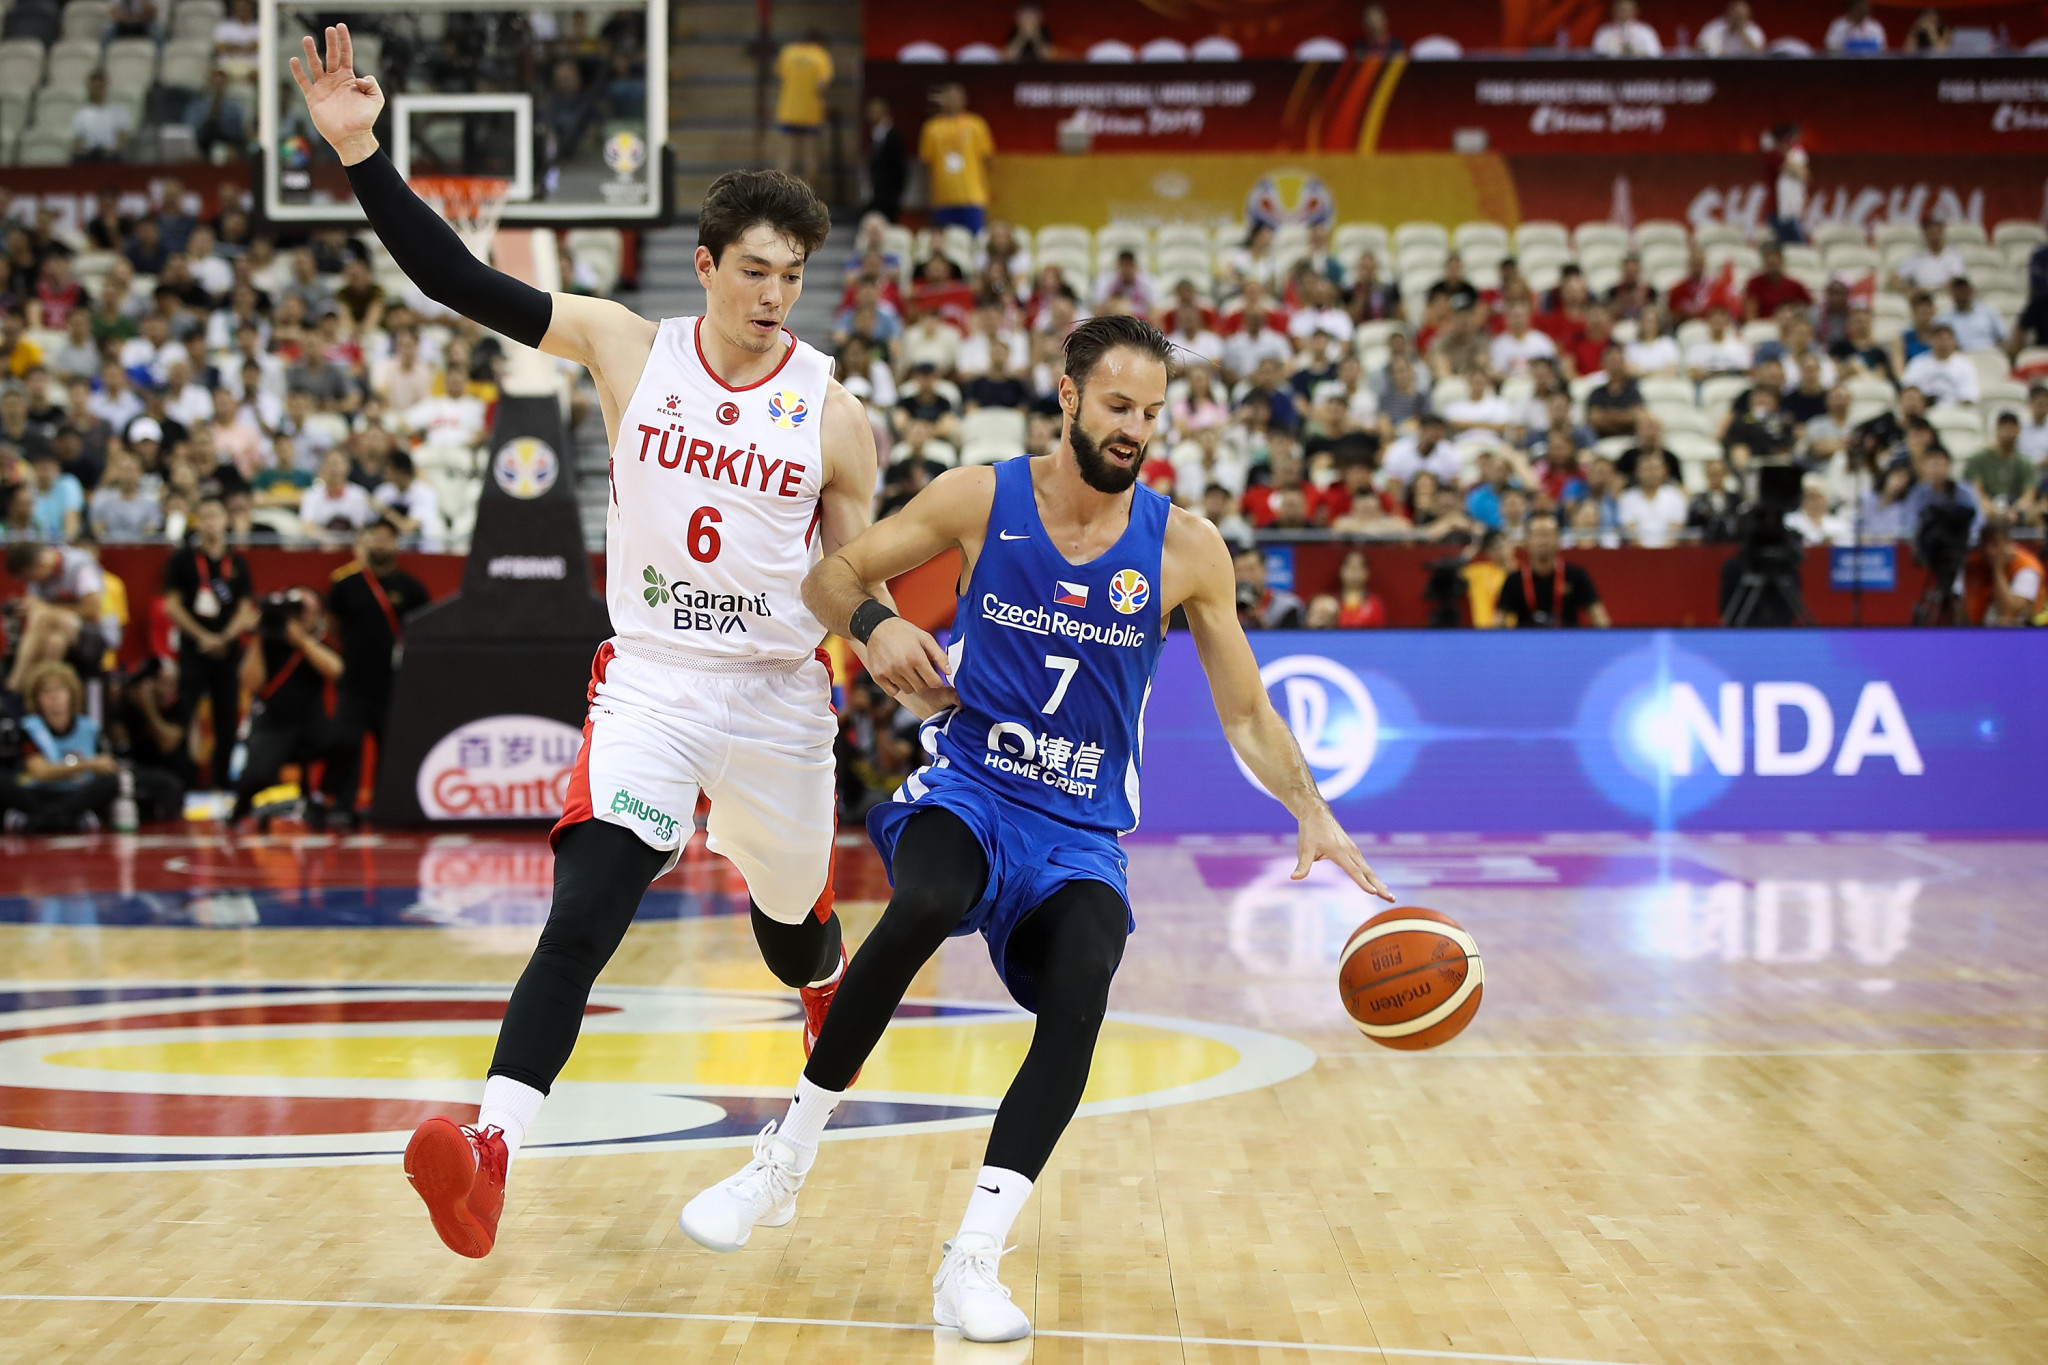 Czech Republic upset Turkey to advance at FIBA World Cup